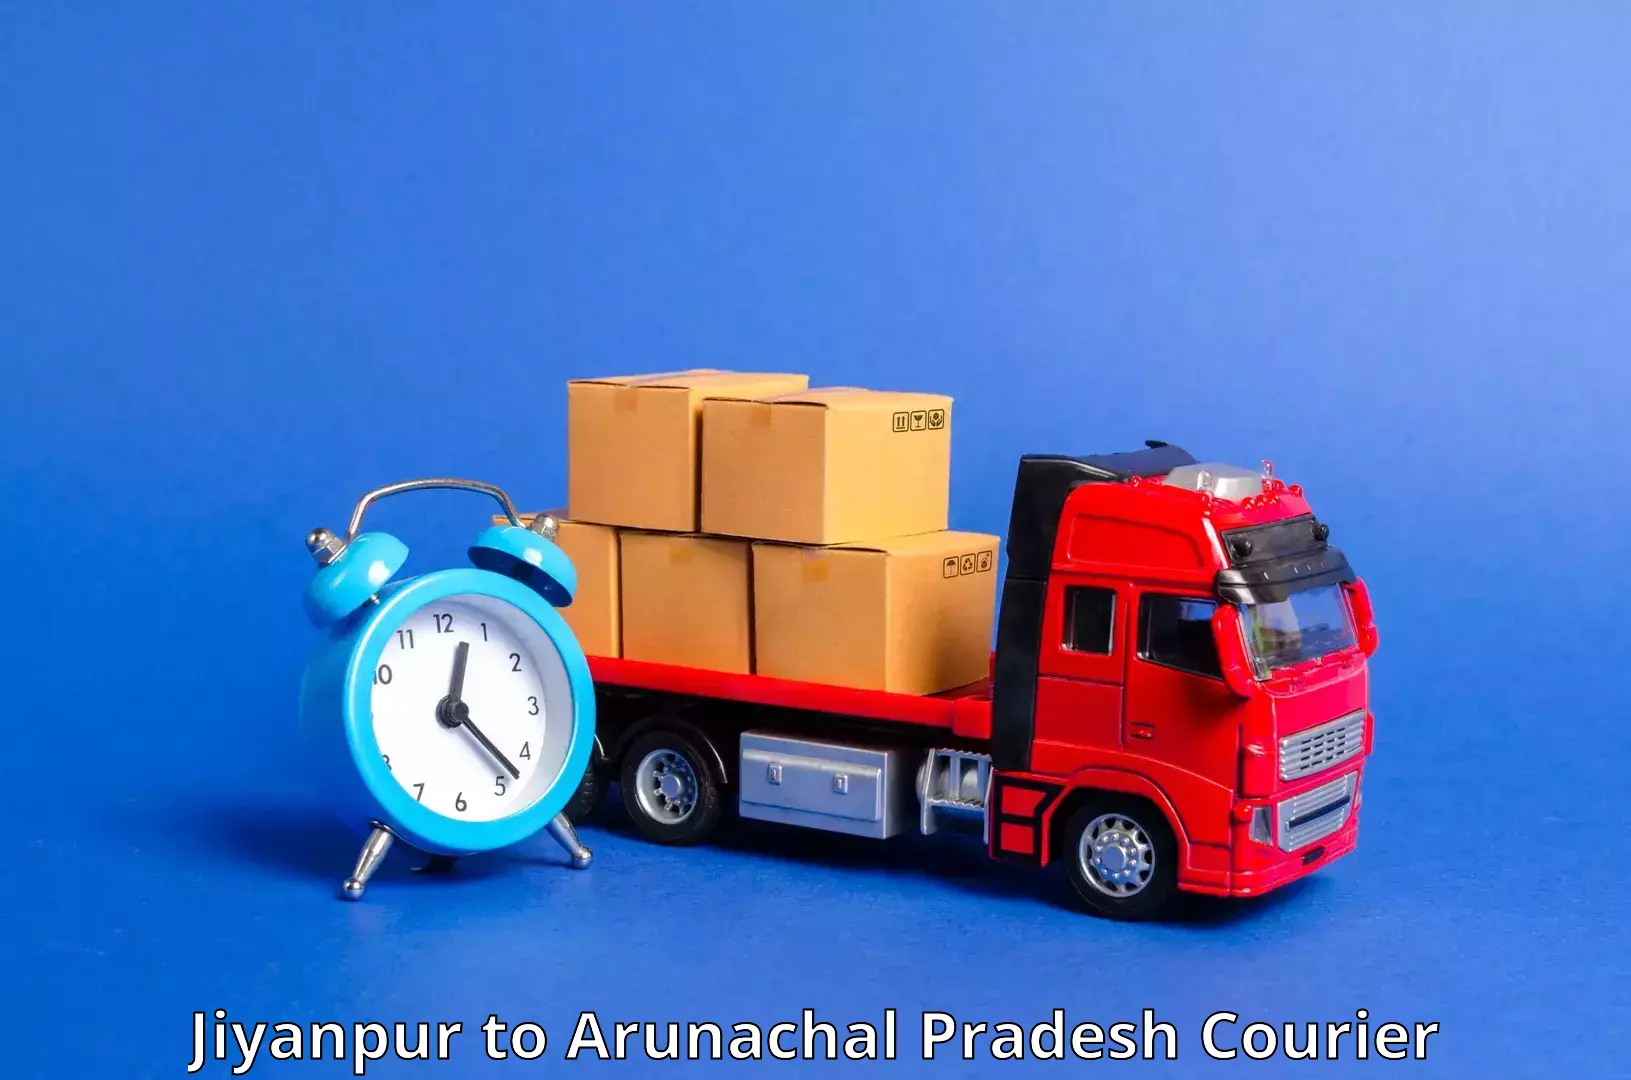 State-of-the-art courier technology Jiyanpur to Arunachal Pradesh